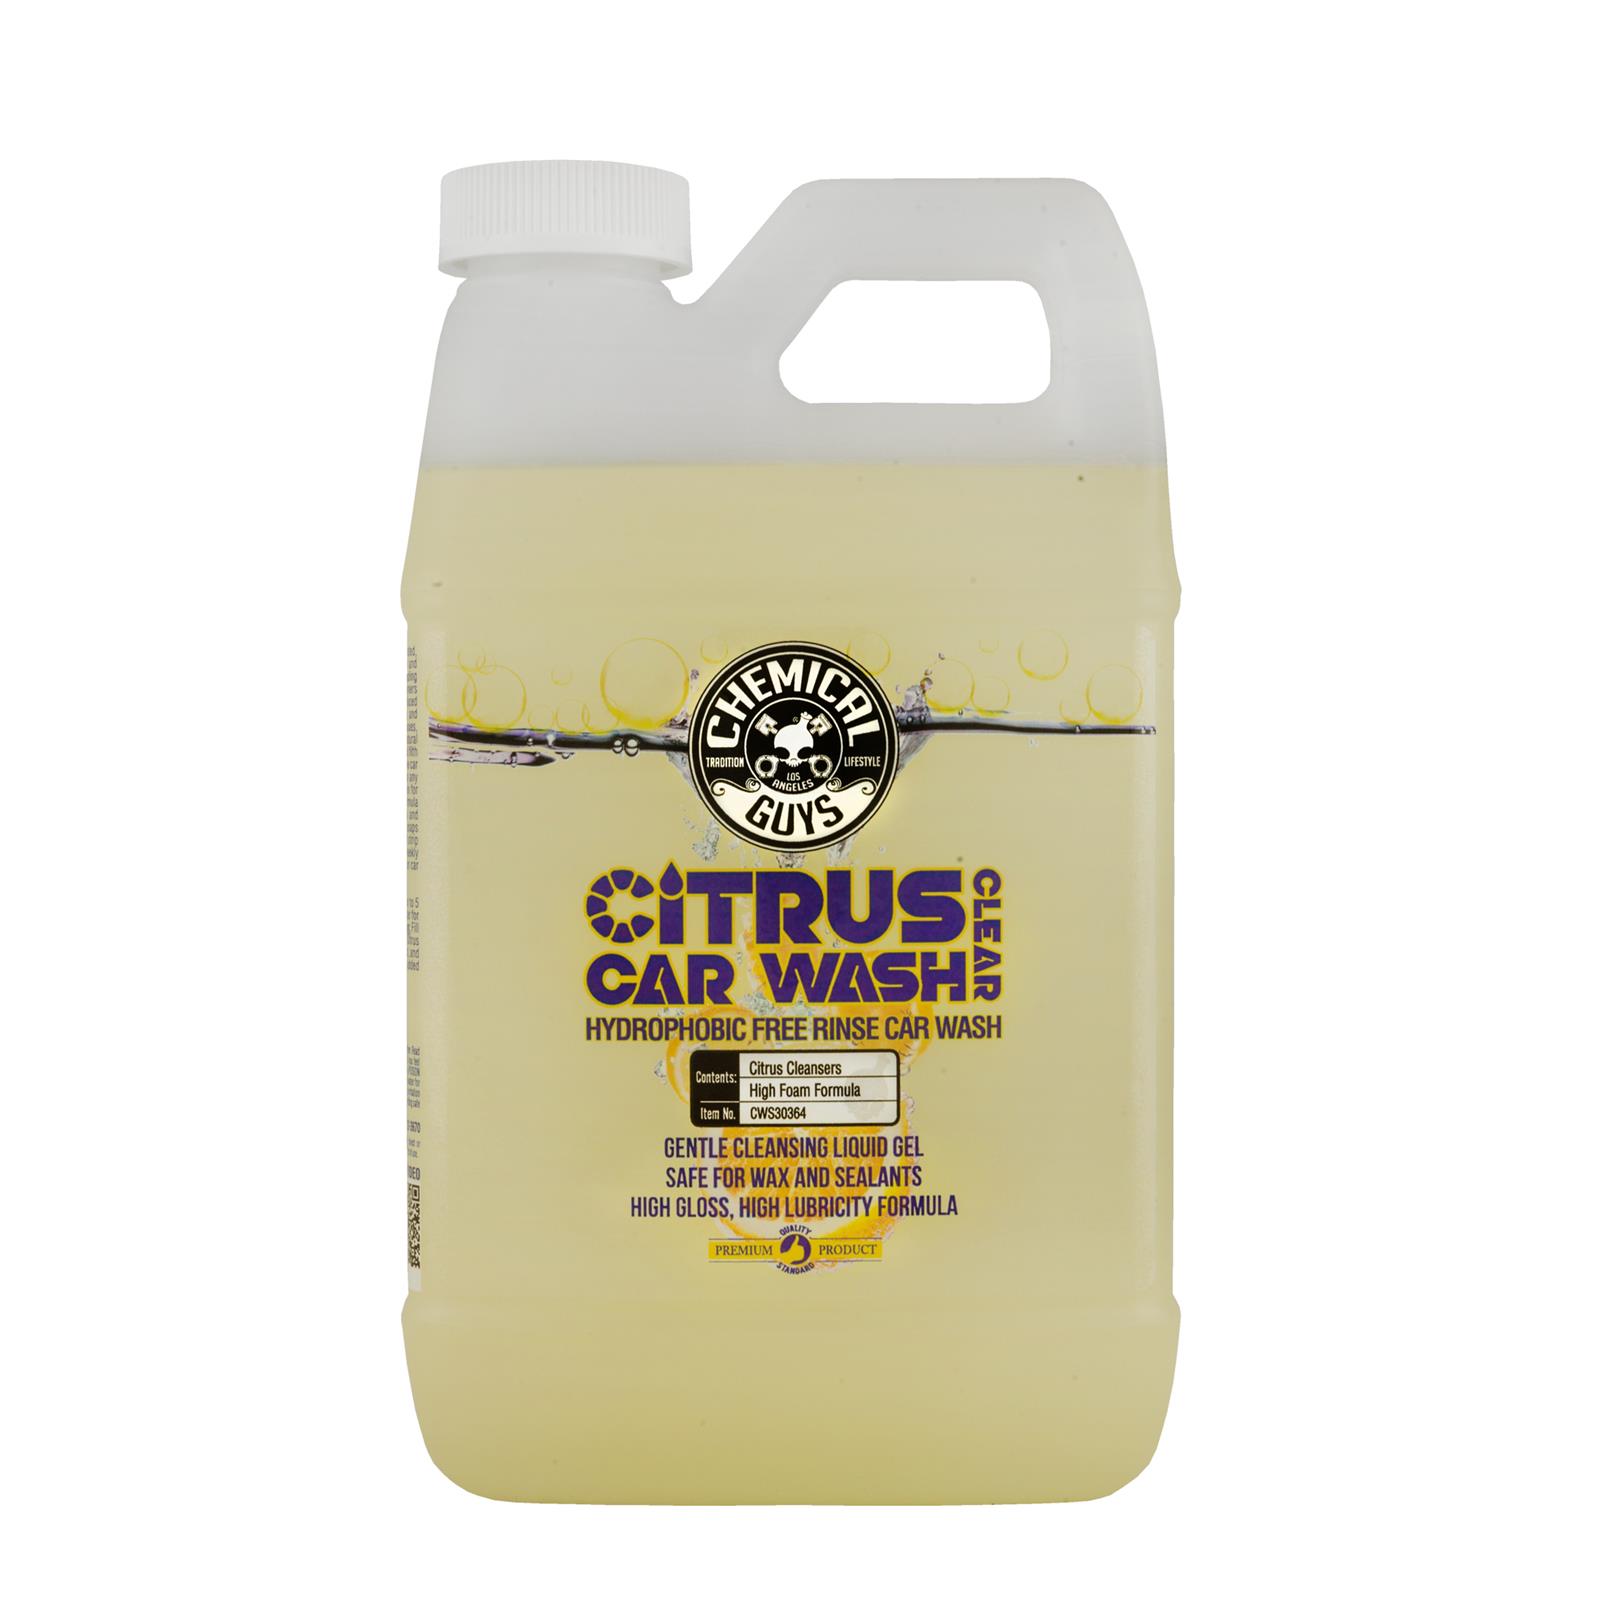 Chemical Guys - CWS301 - Citrus Wash & Gloss Car Wash - 1Gal